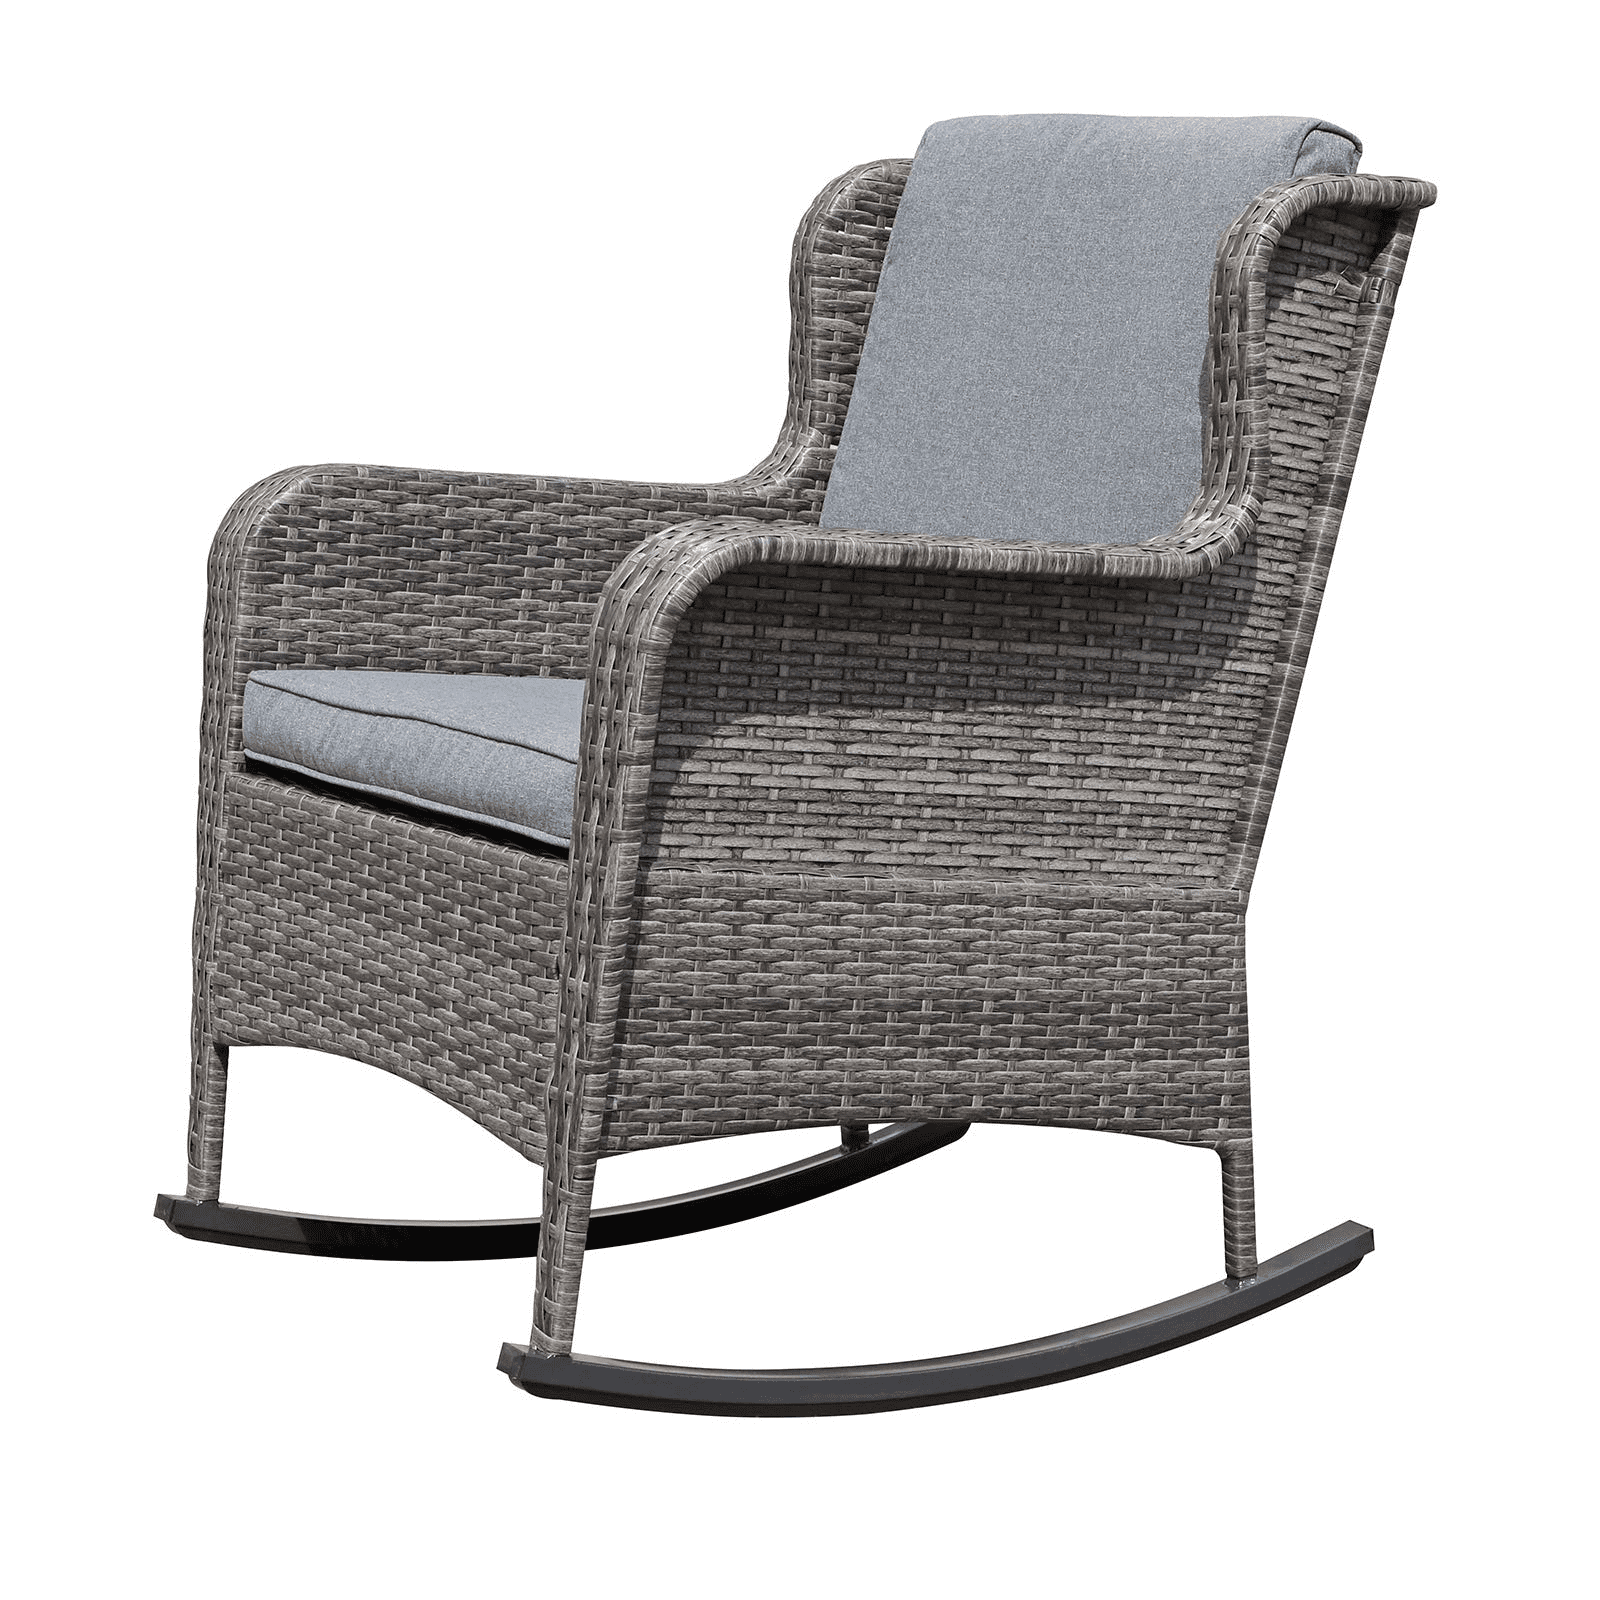 Soleil Jardin Patio Resin Wicker, Outdoor Wicker Rocking Chair Cushions